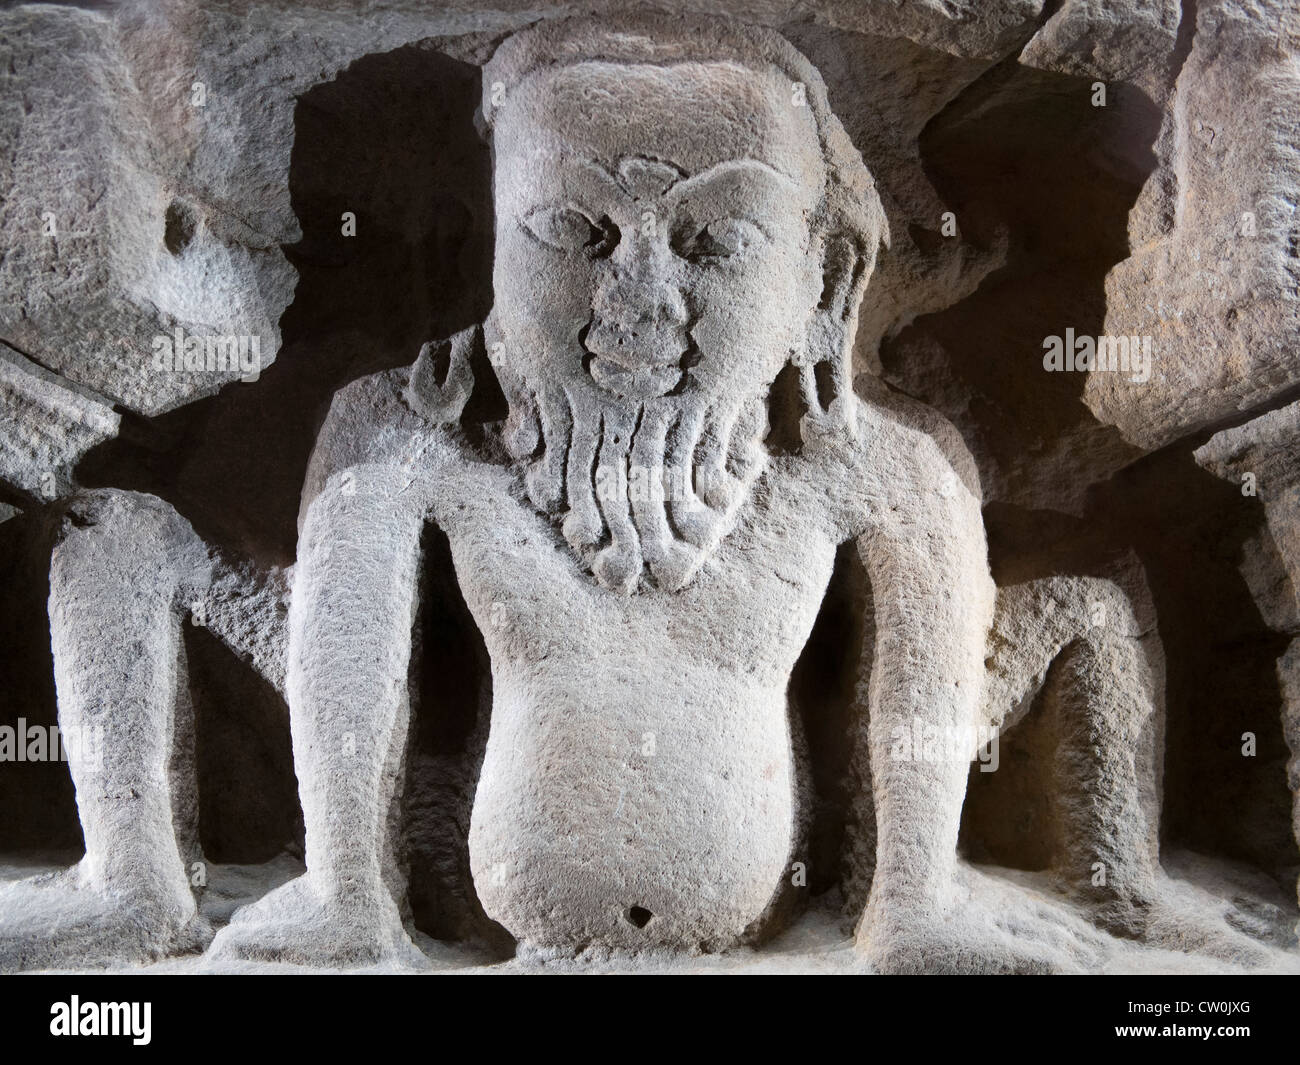 A Nepalese bearded Yaksha - nature spirit - crouches amongst stylised rocks - the Ashmolean Museum, Oxford Stock Photo